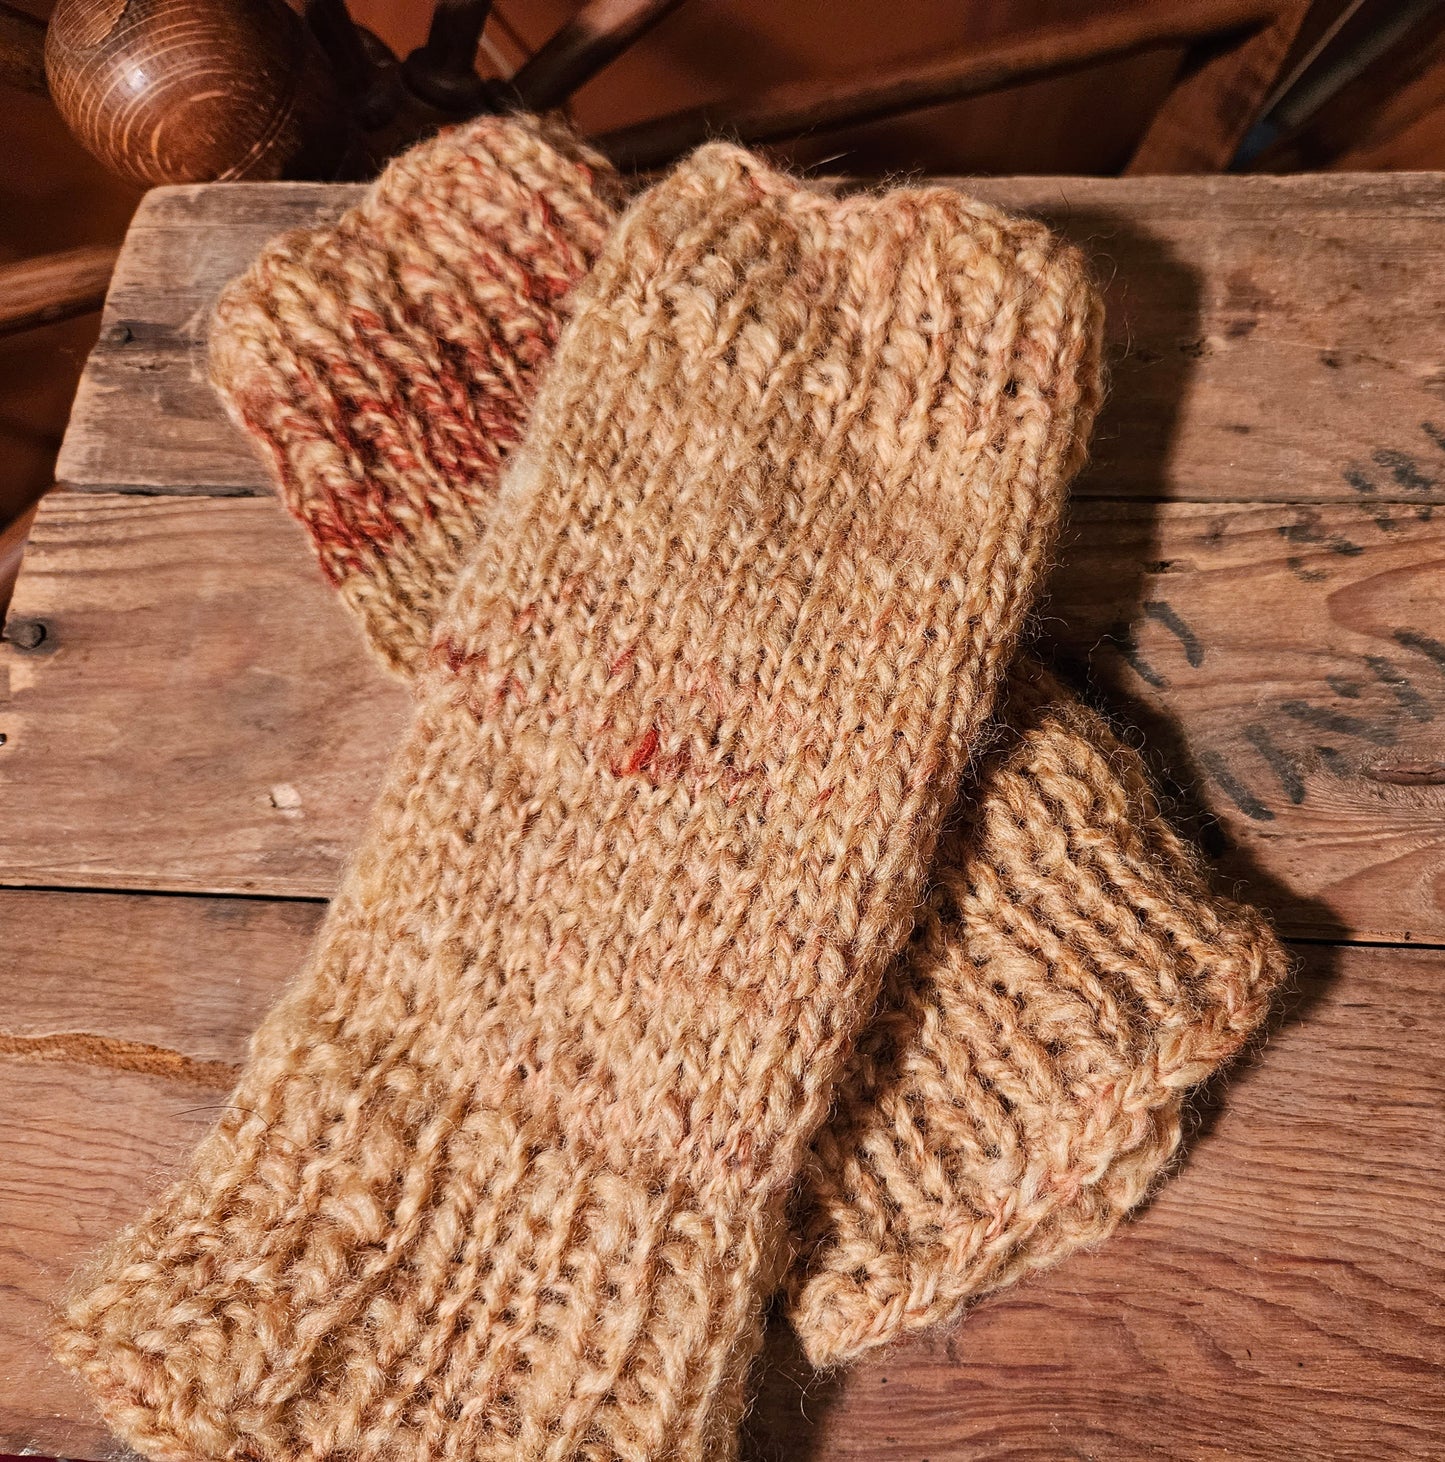 Mitts- Handspun/Handknit Rich Marigold 100% Romney Wool - Women's Medium- 6" cuff